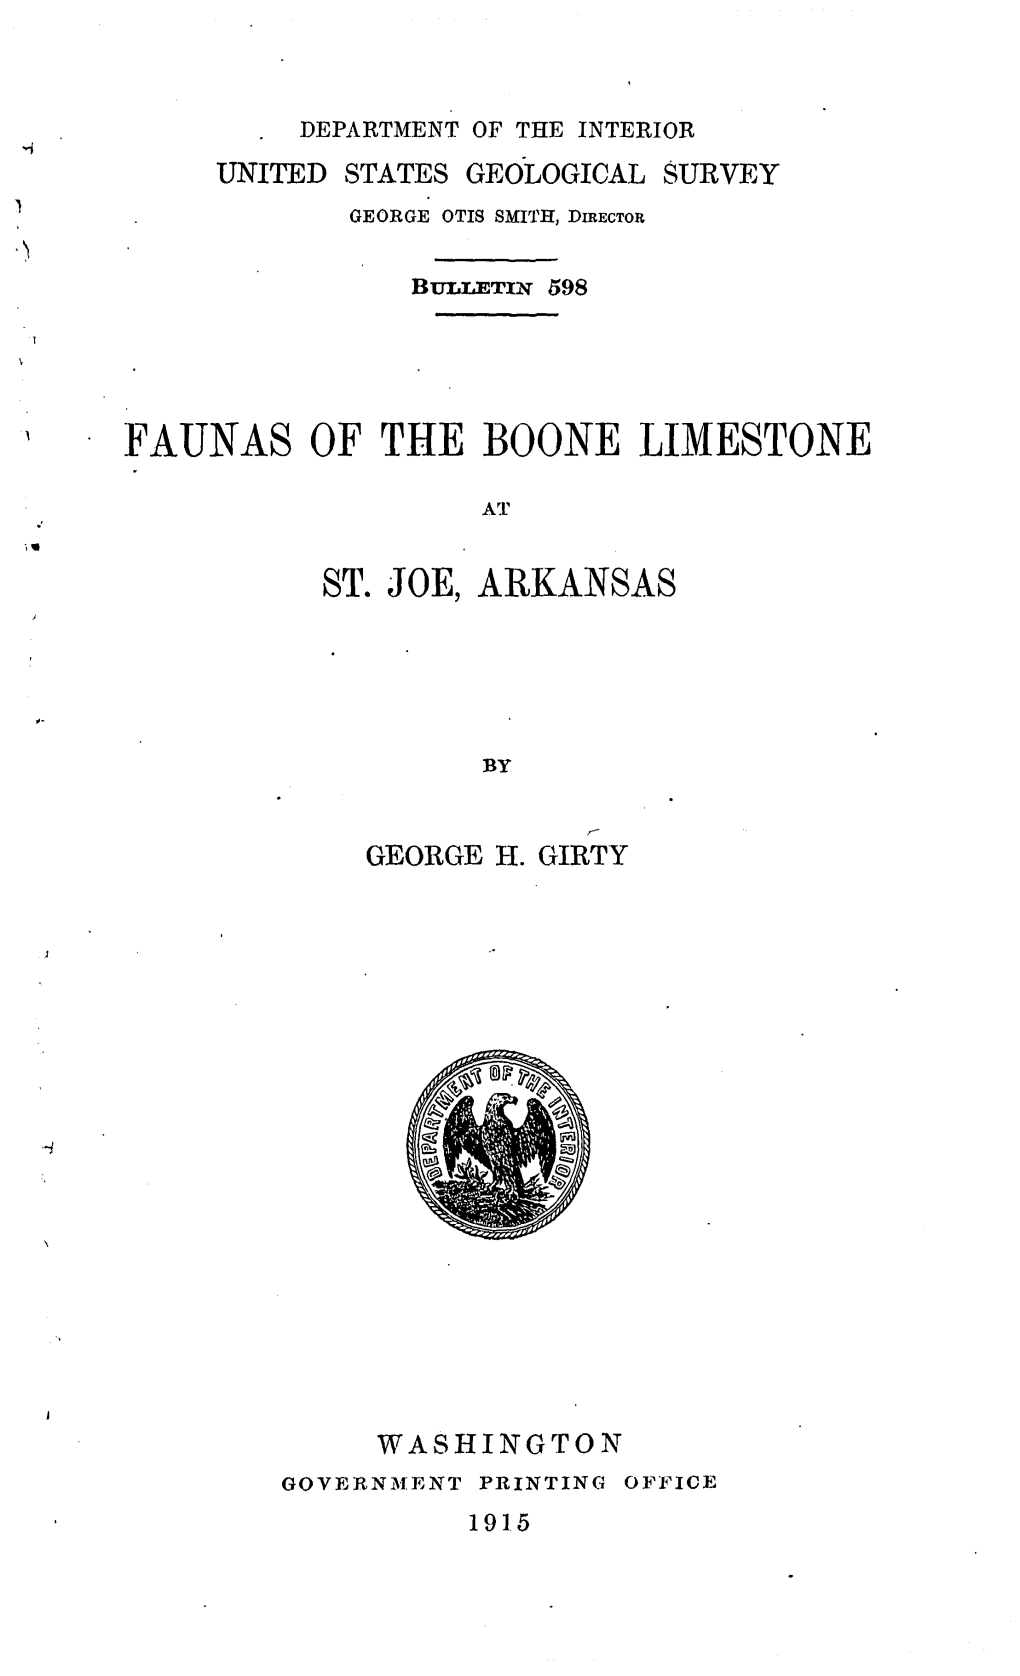 Faunas of the Boone Limestone